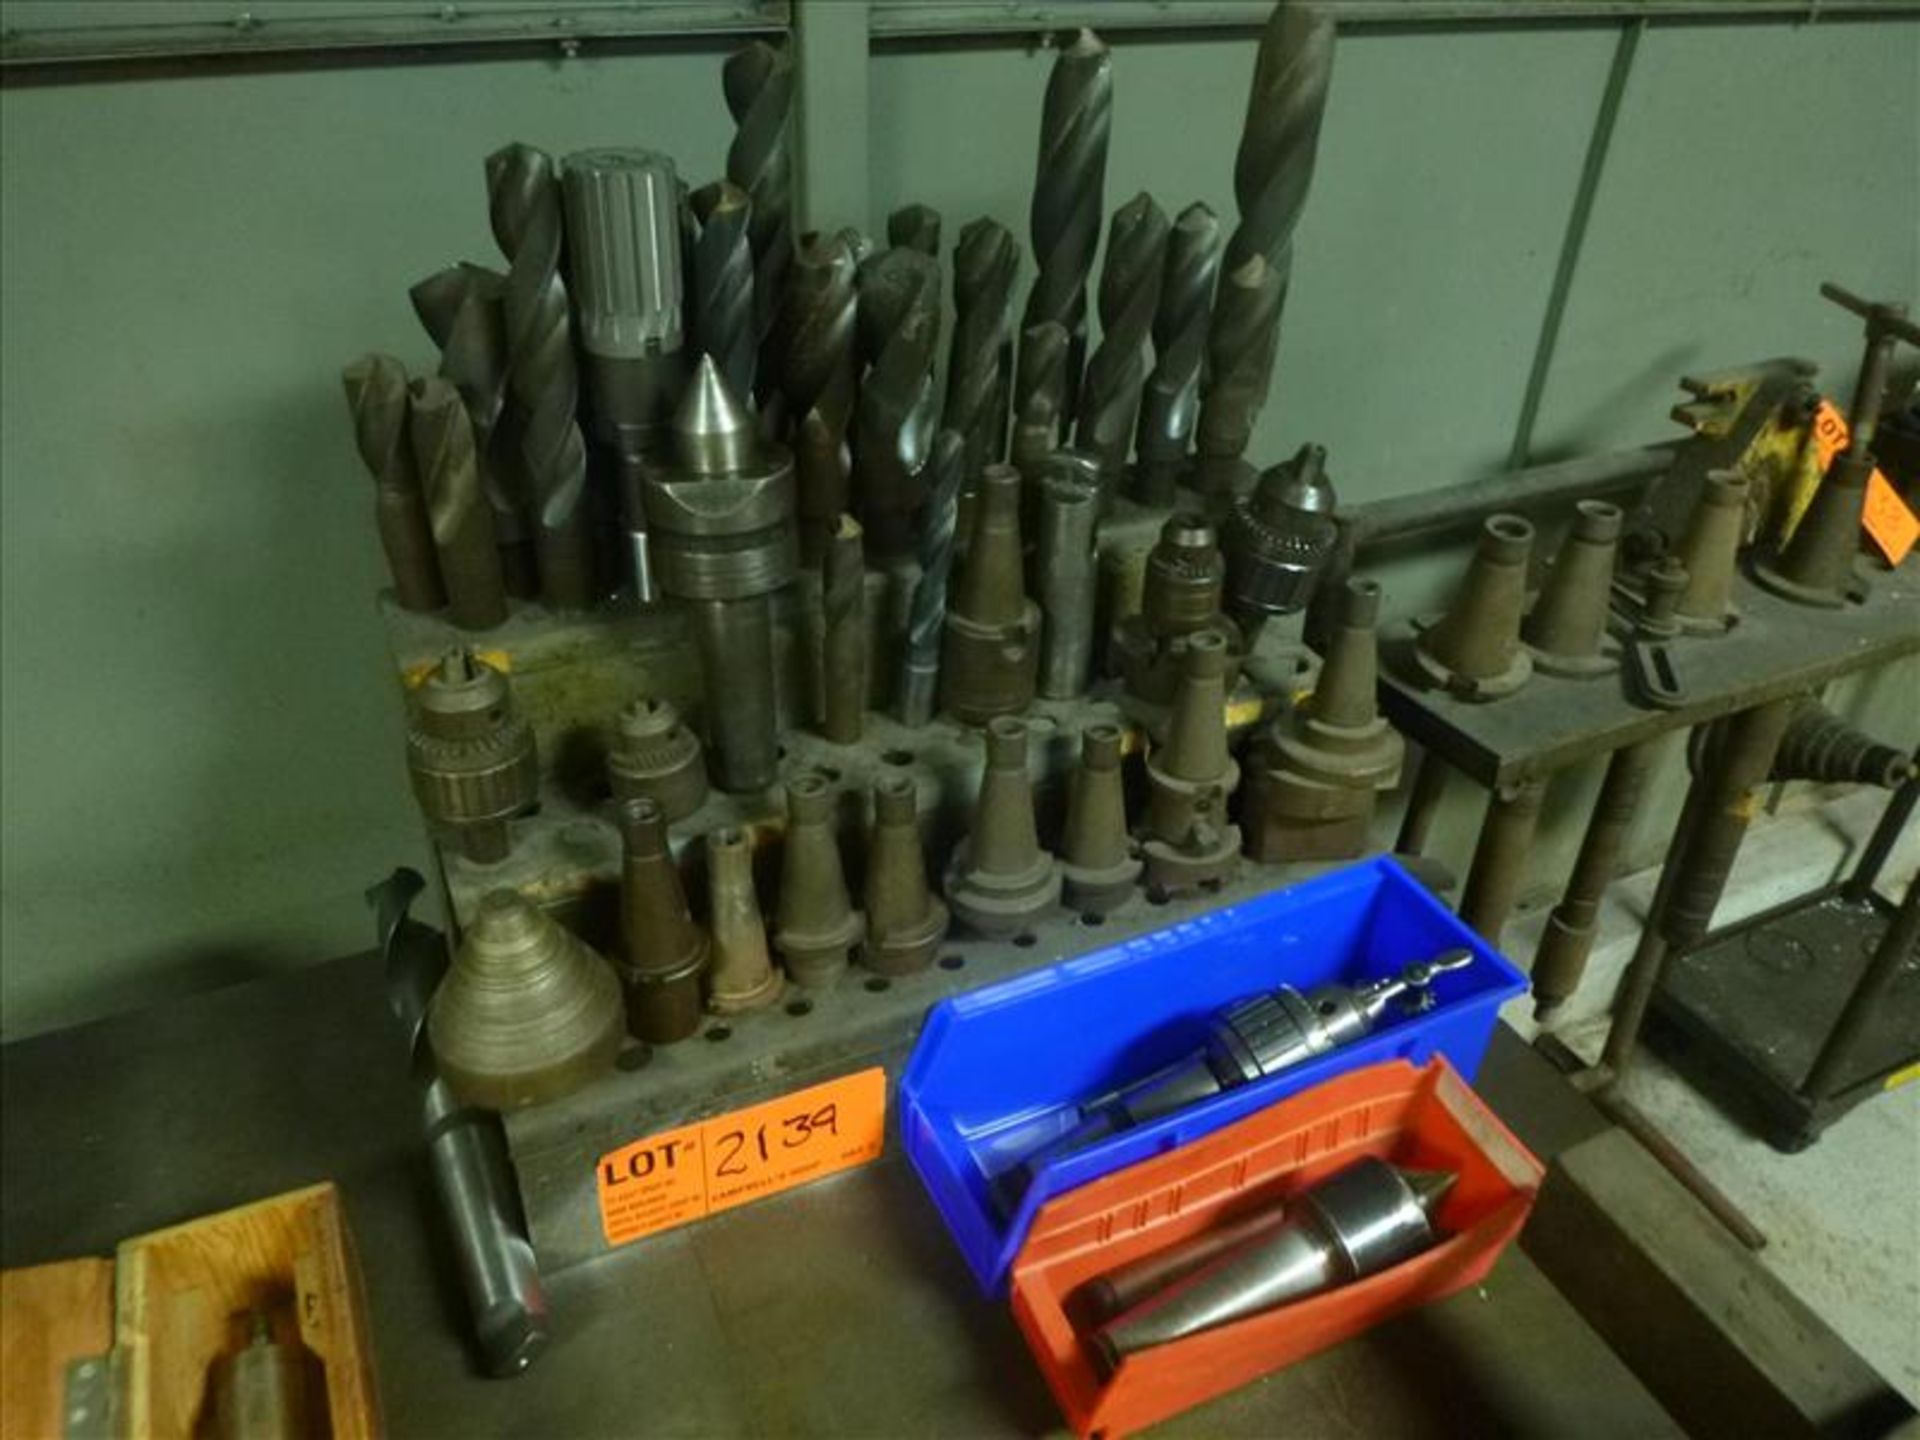 drills, tool holders, etc. [Machine Shop, 1st Floor]